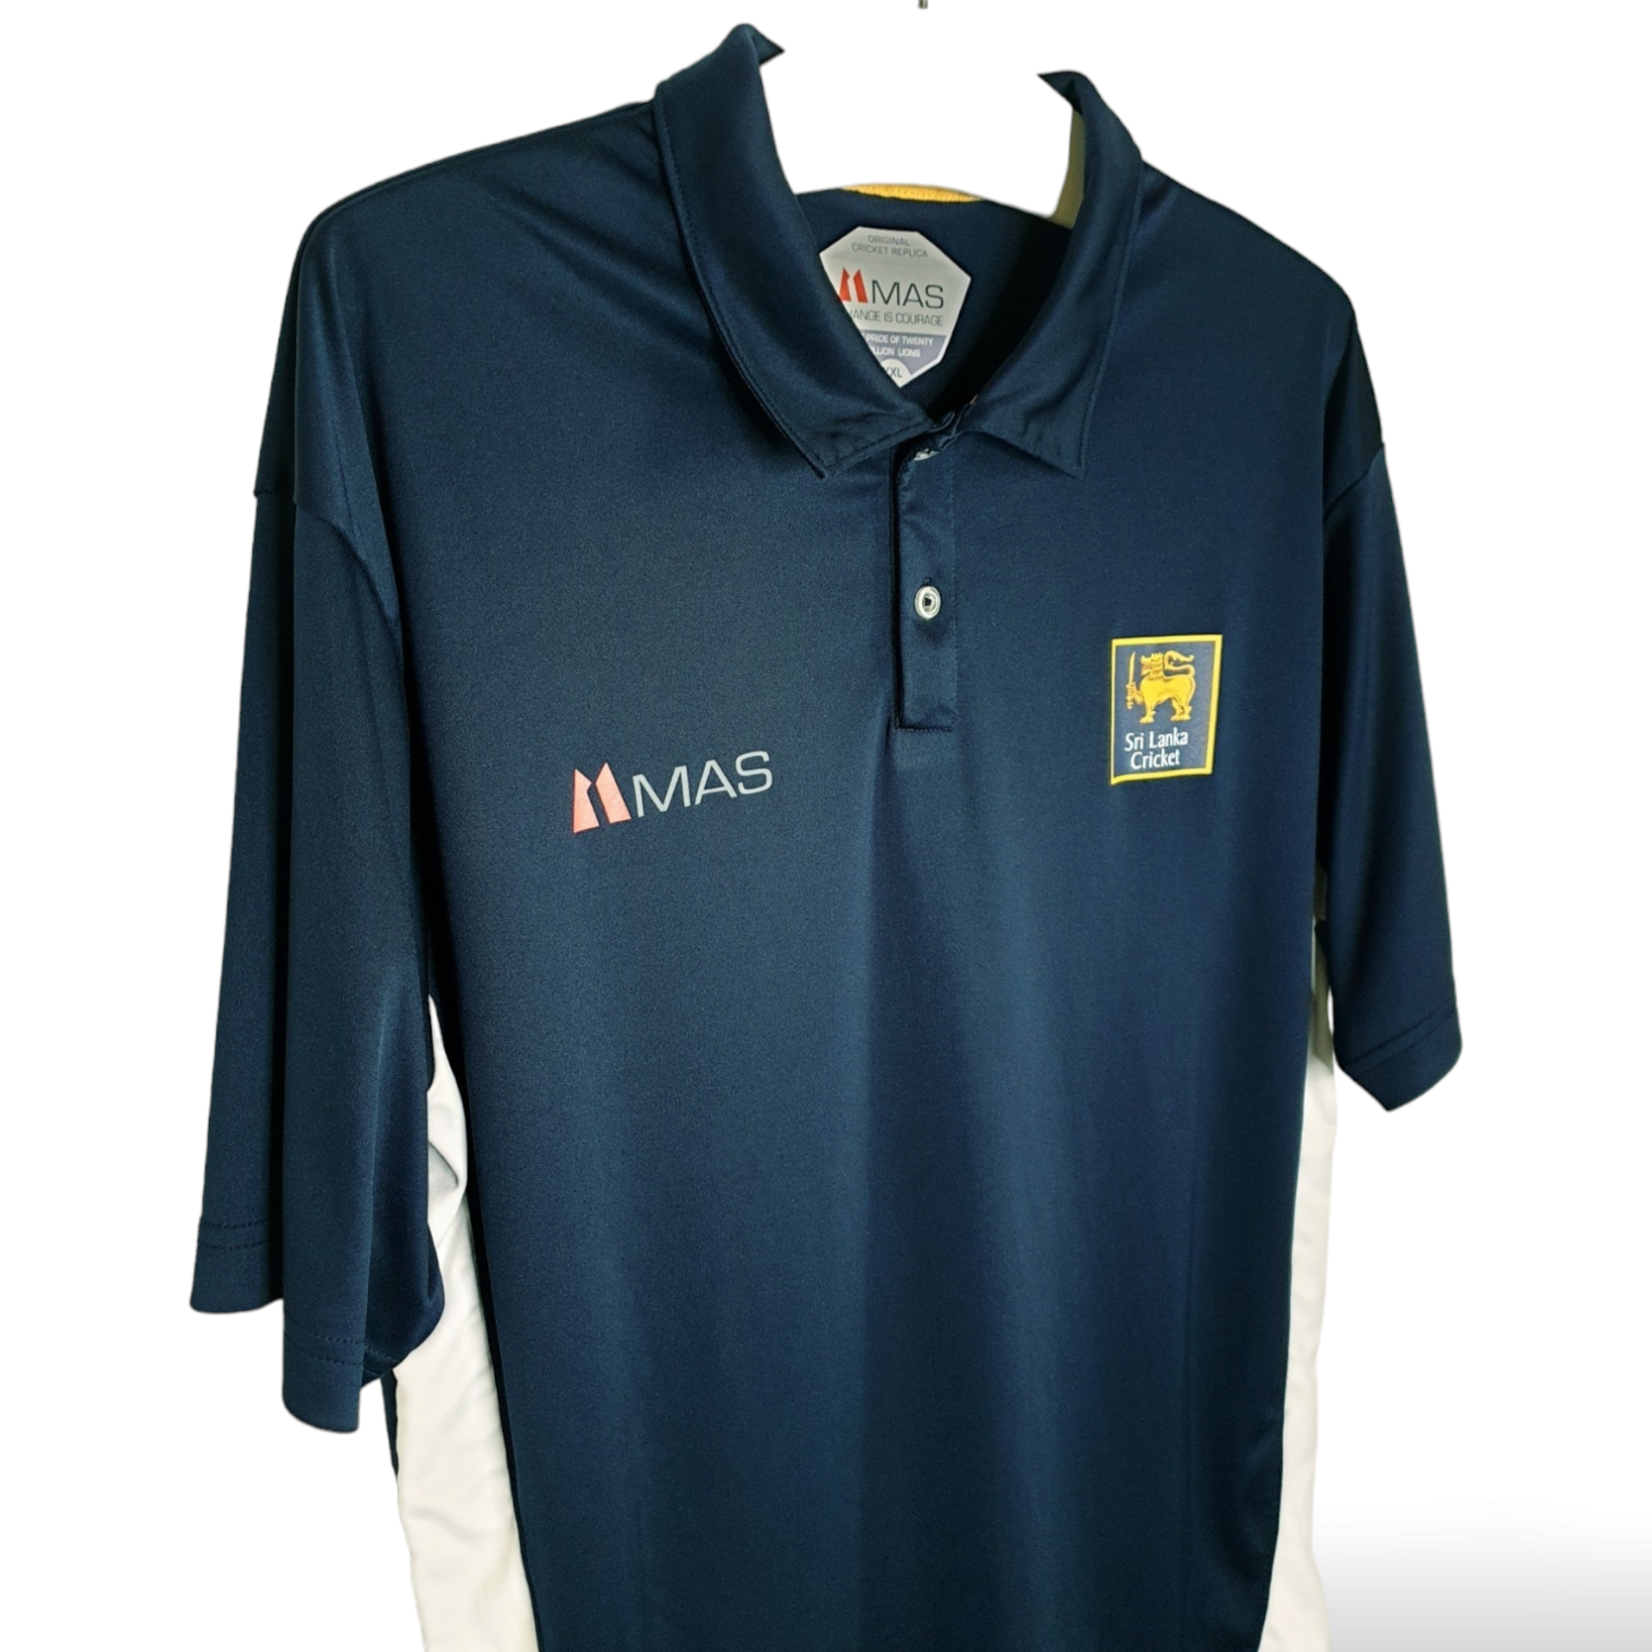 MAS Holdings Original MAS Holdings vintage cricket shirt Sri Lanka